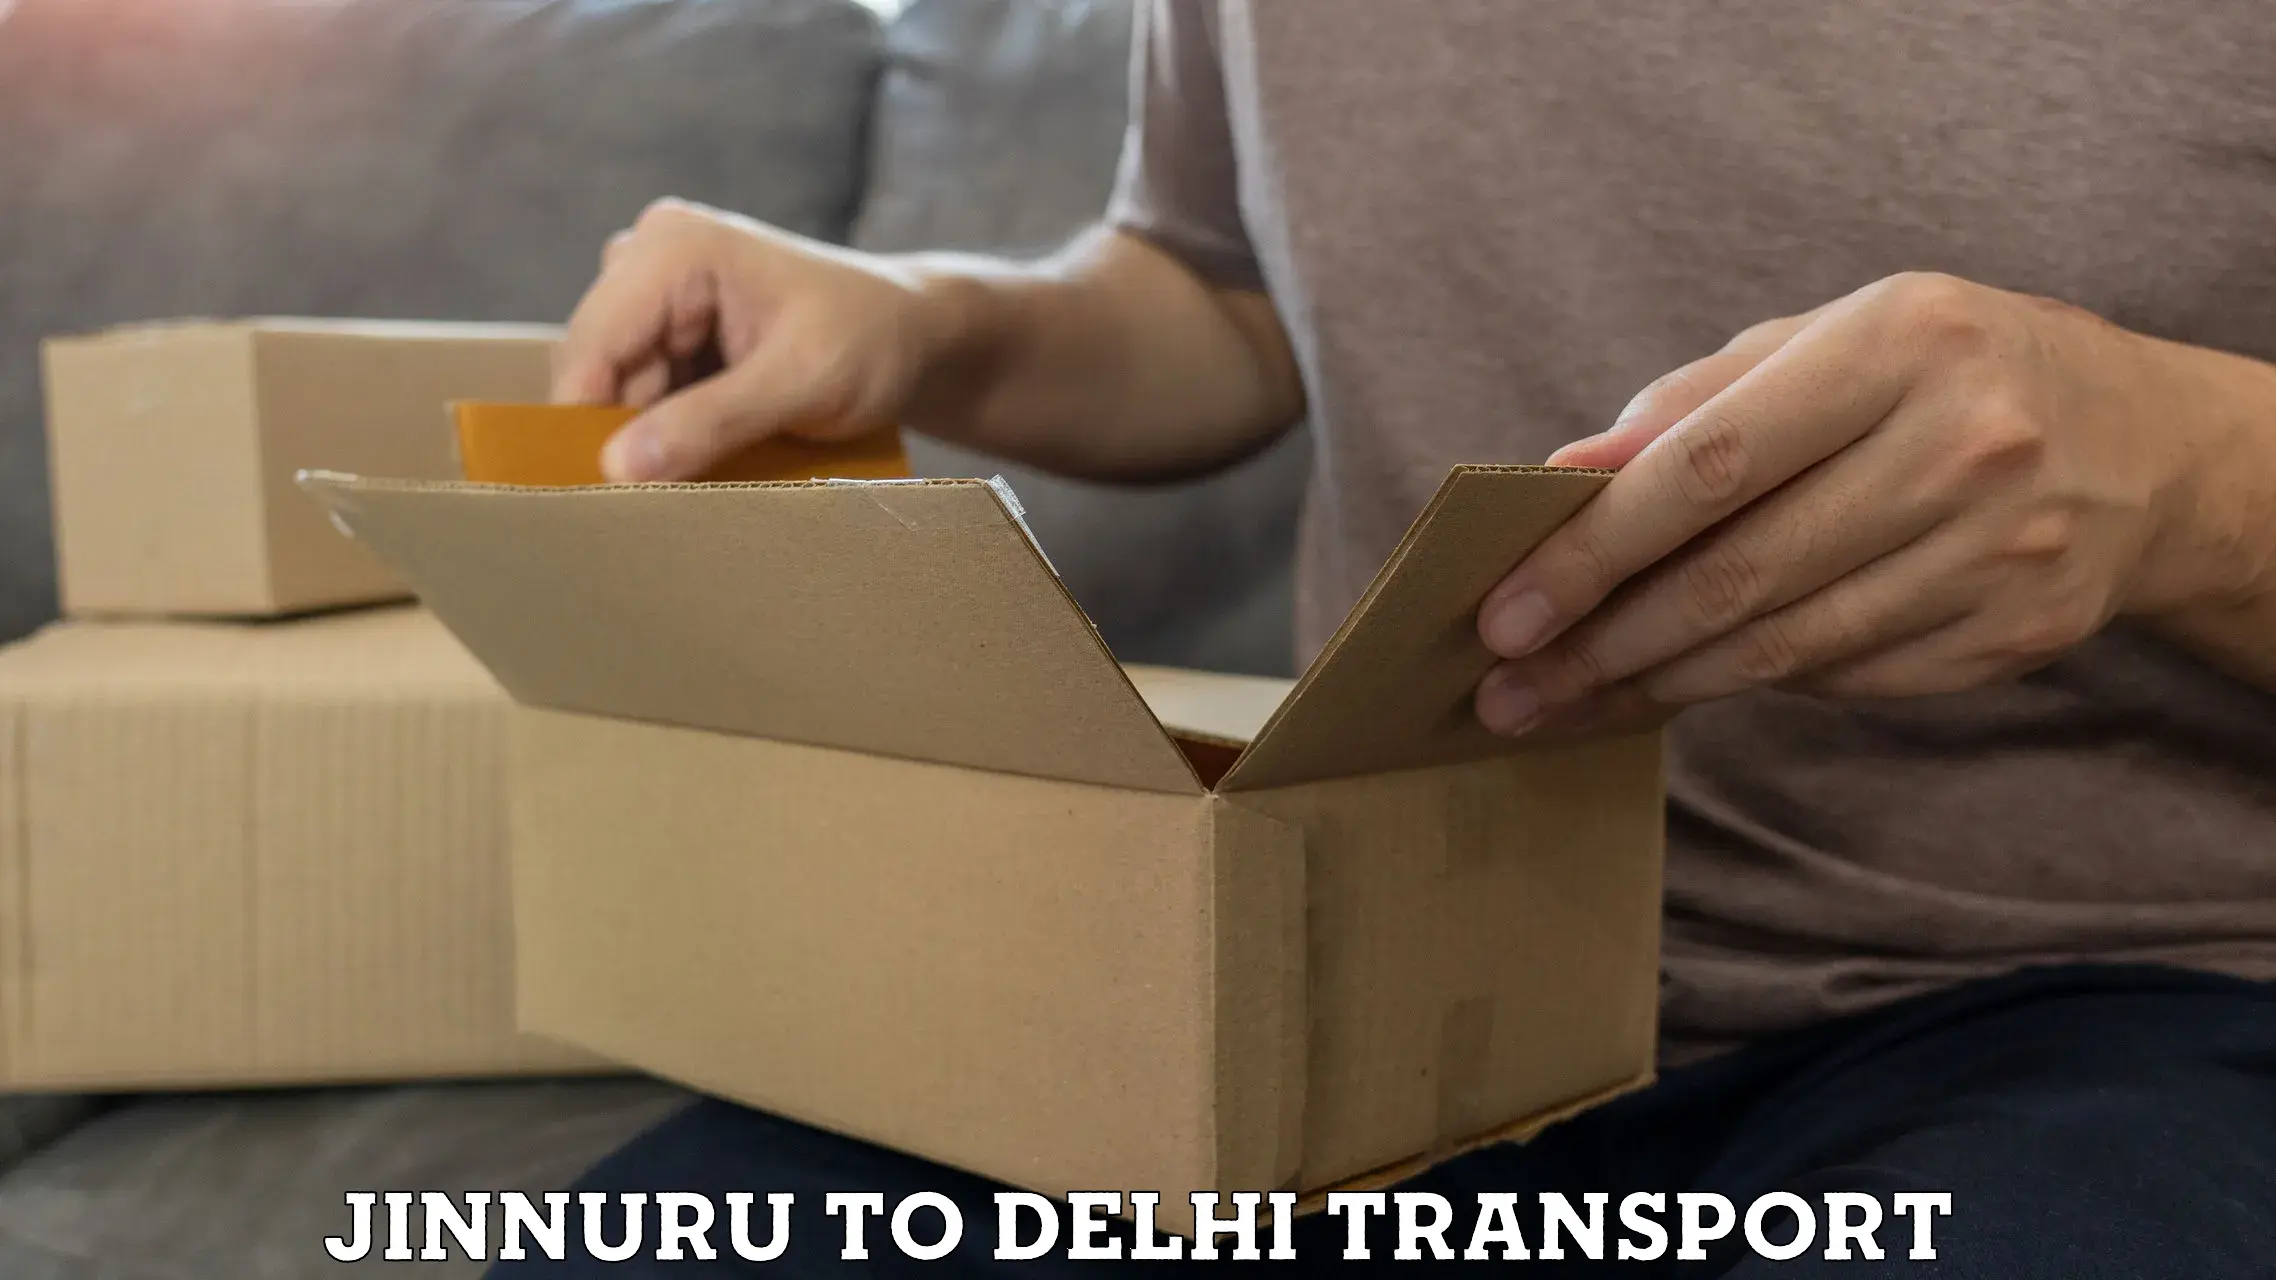 Transportation services Jinnuru to Delhi